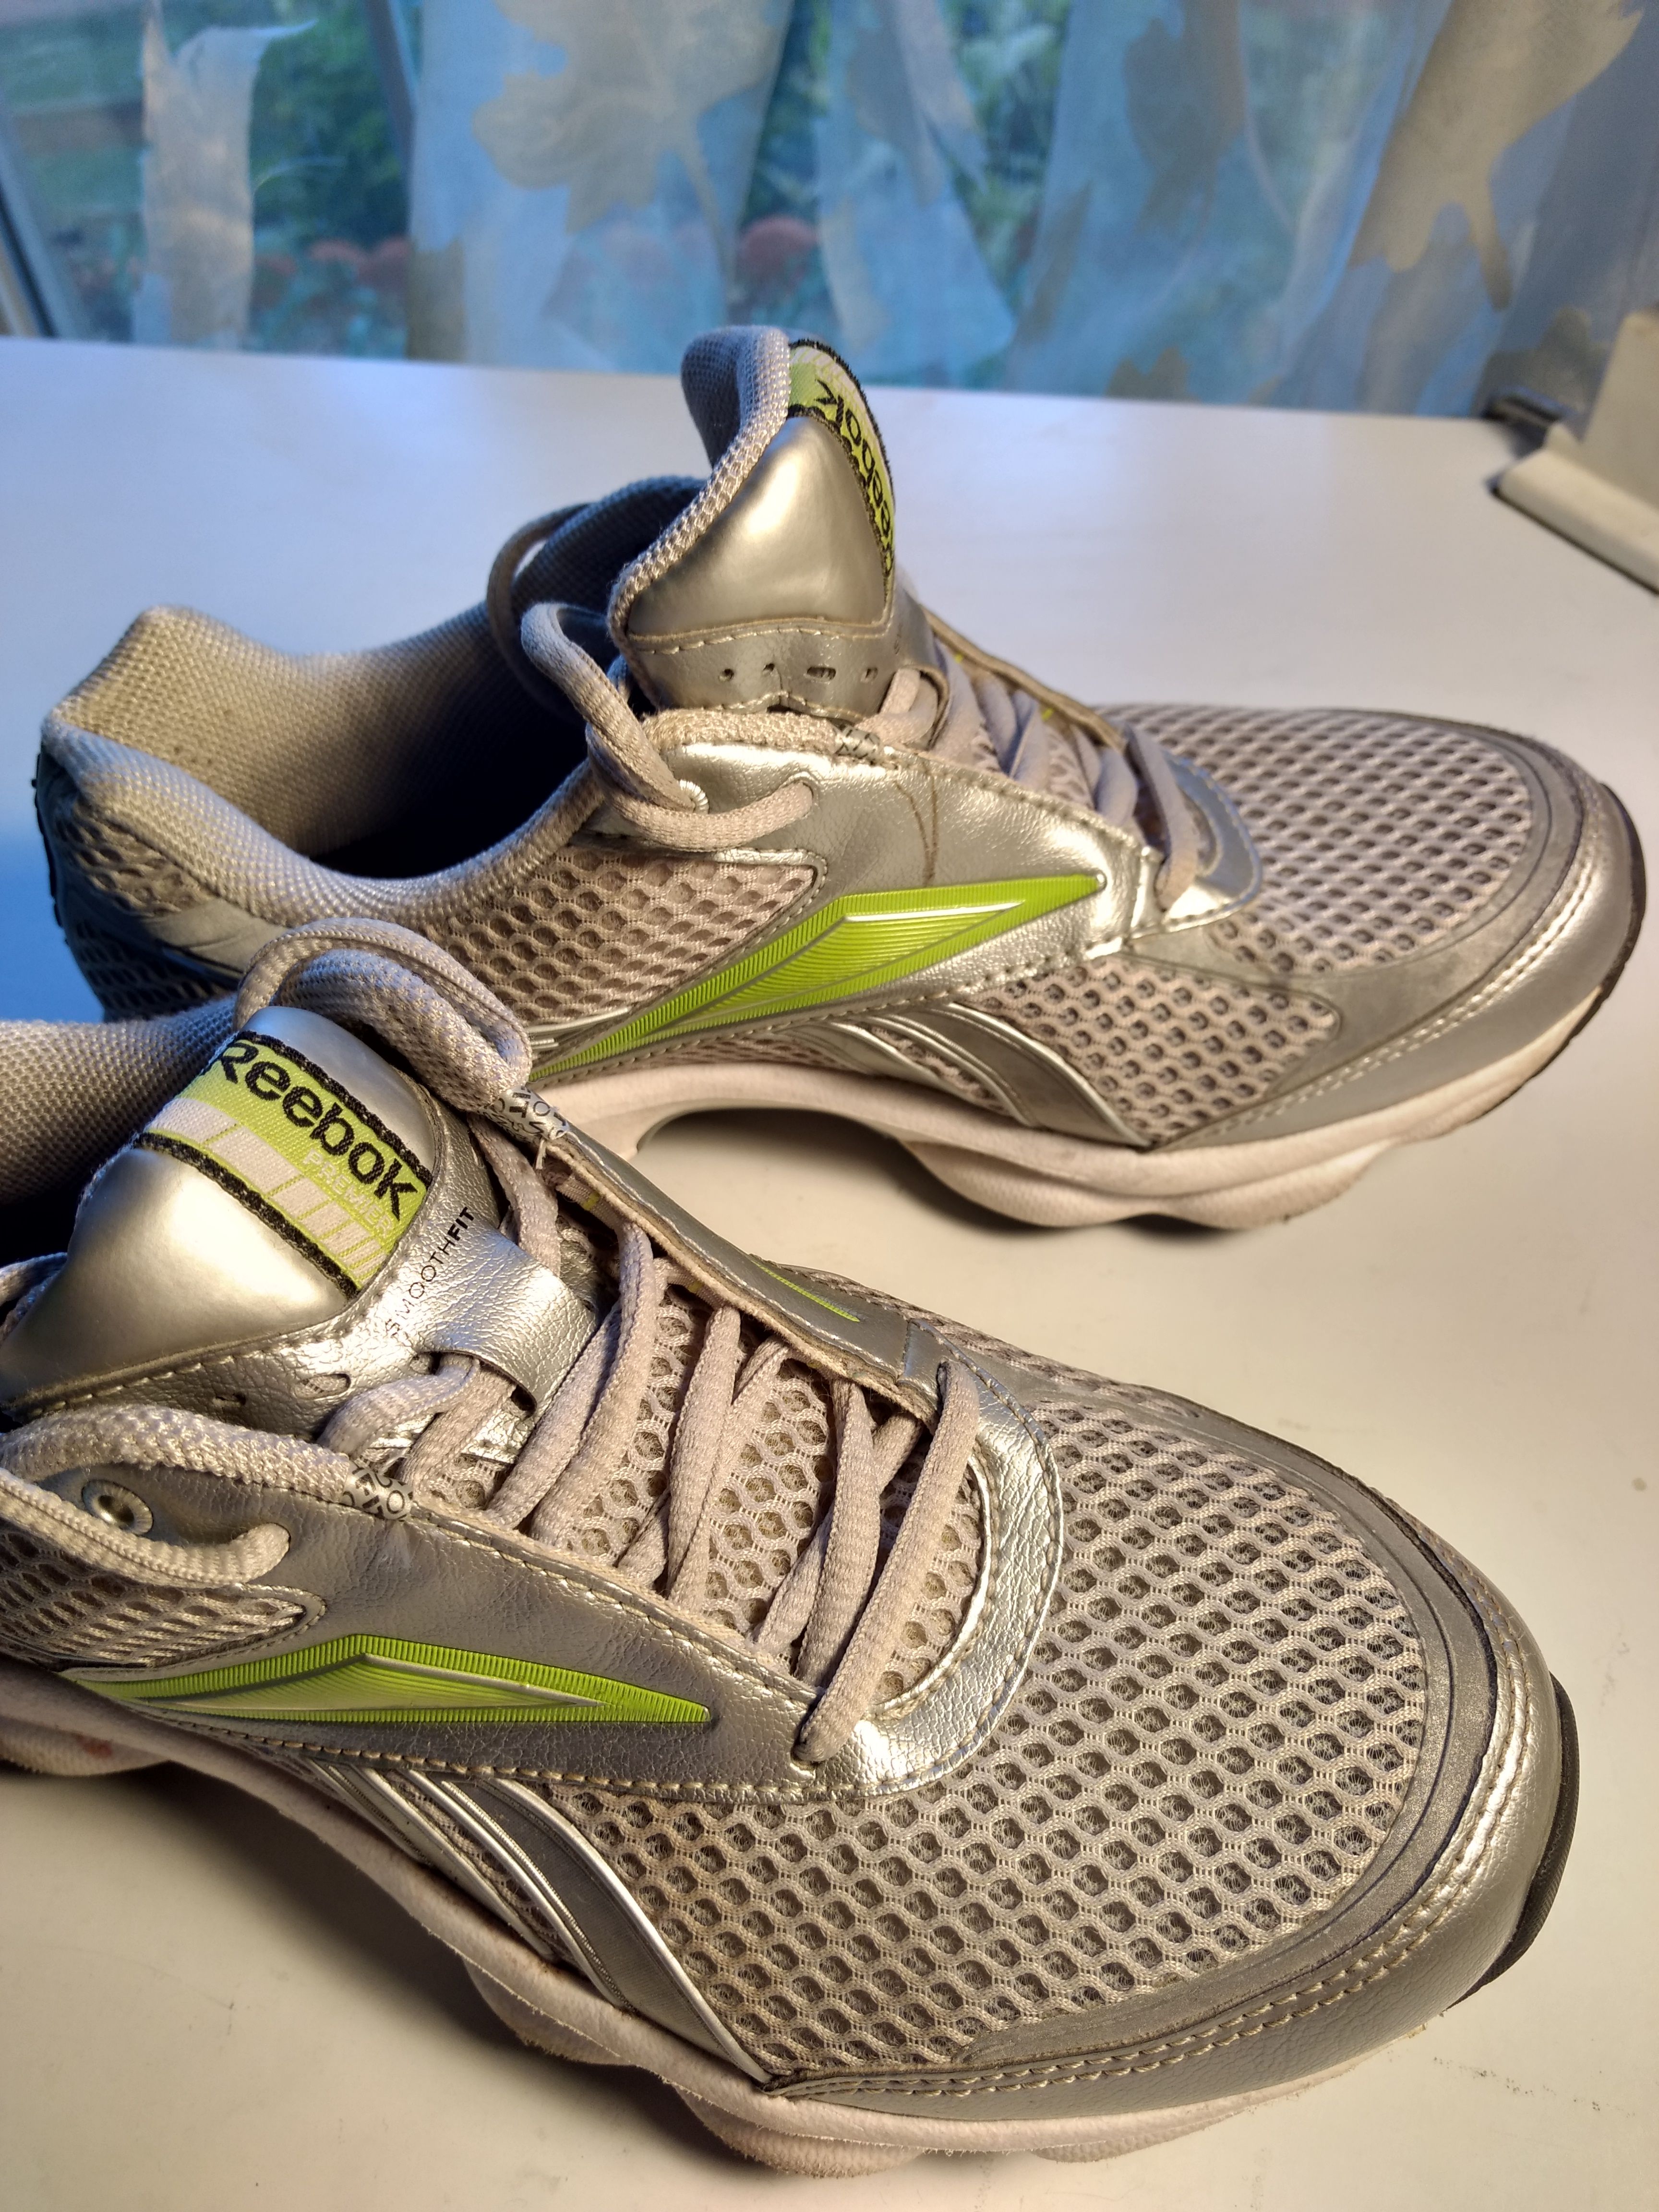 Ladies Light Gray Reebok Tennis shoes - Size 6